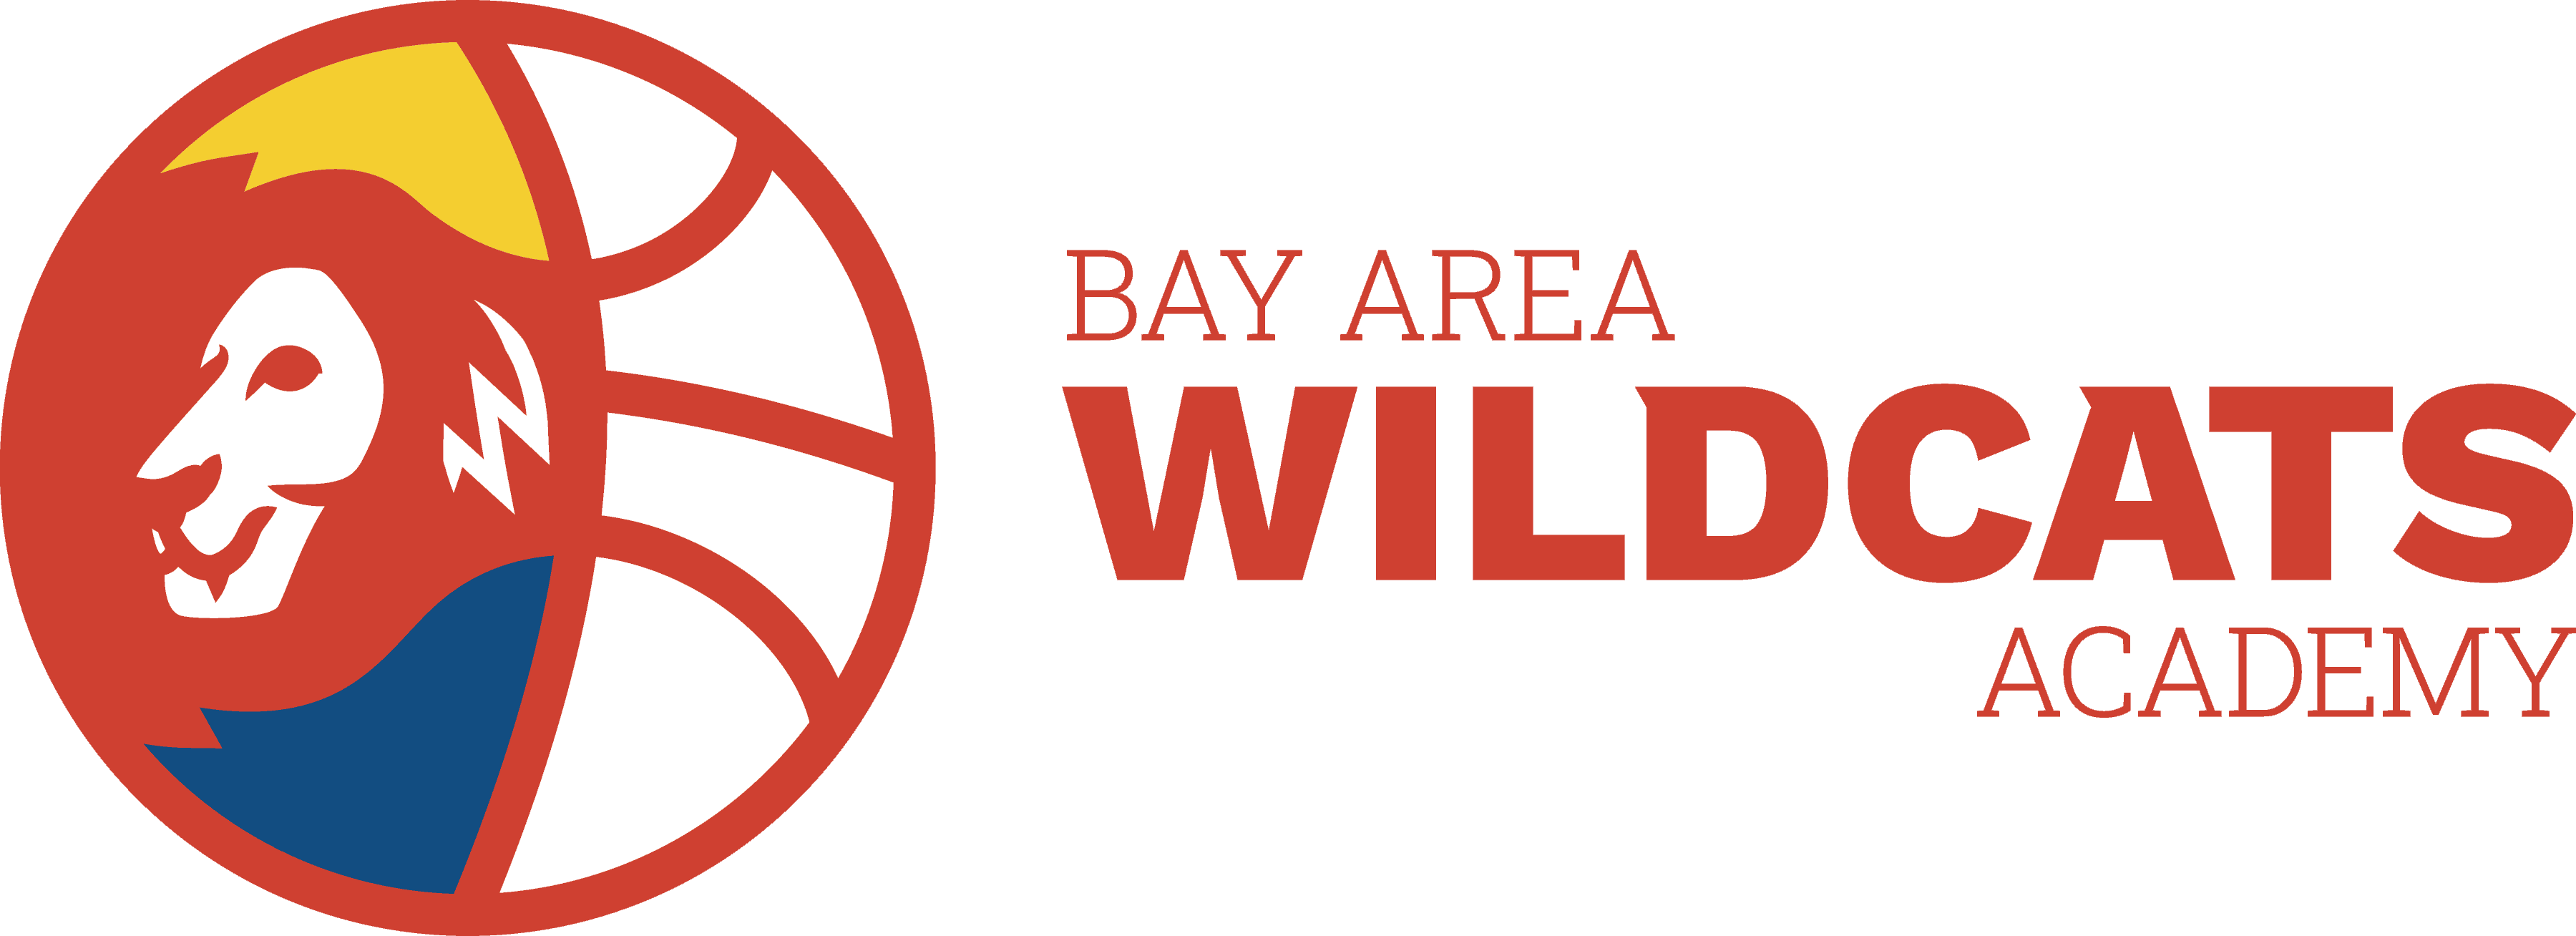 BAY AREA WILDCATS BASKETBALL